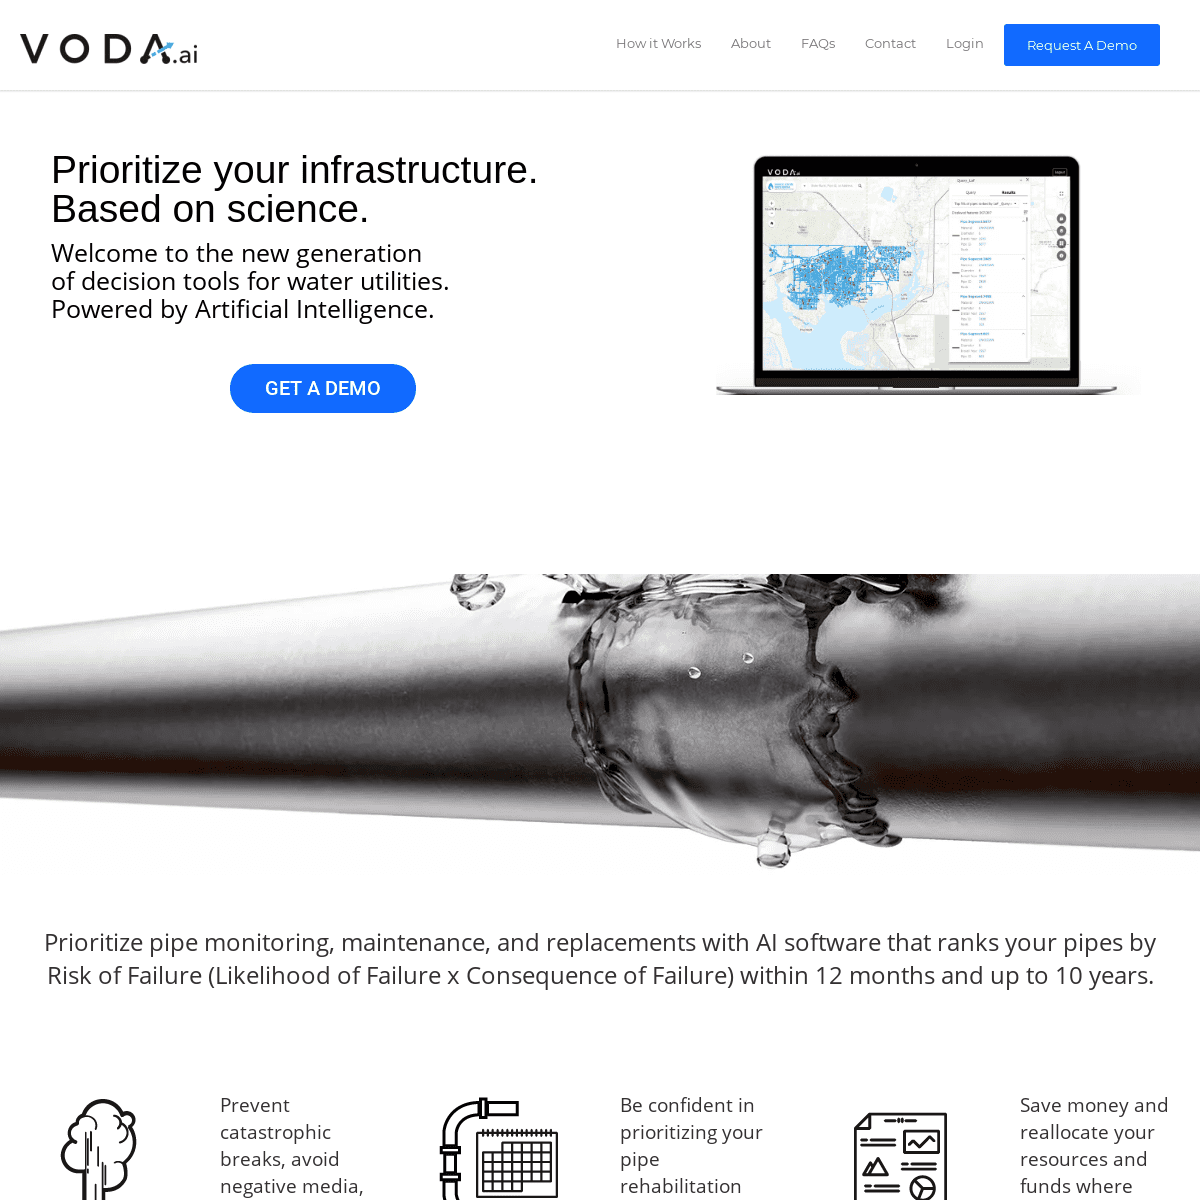 Prioritizing Water Infrasture Through the Power of AI | VODA.ai